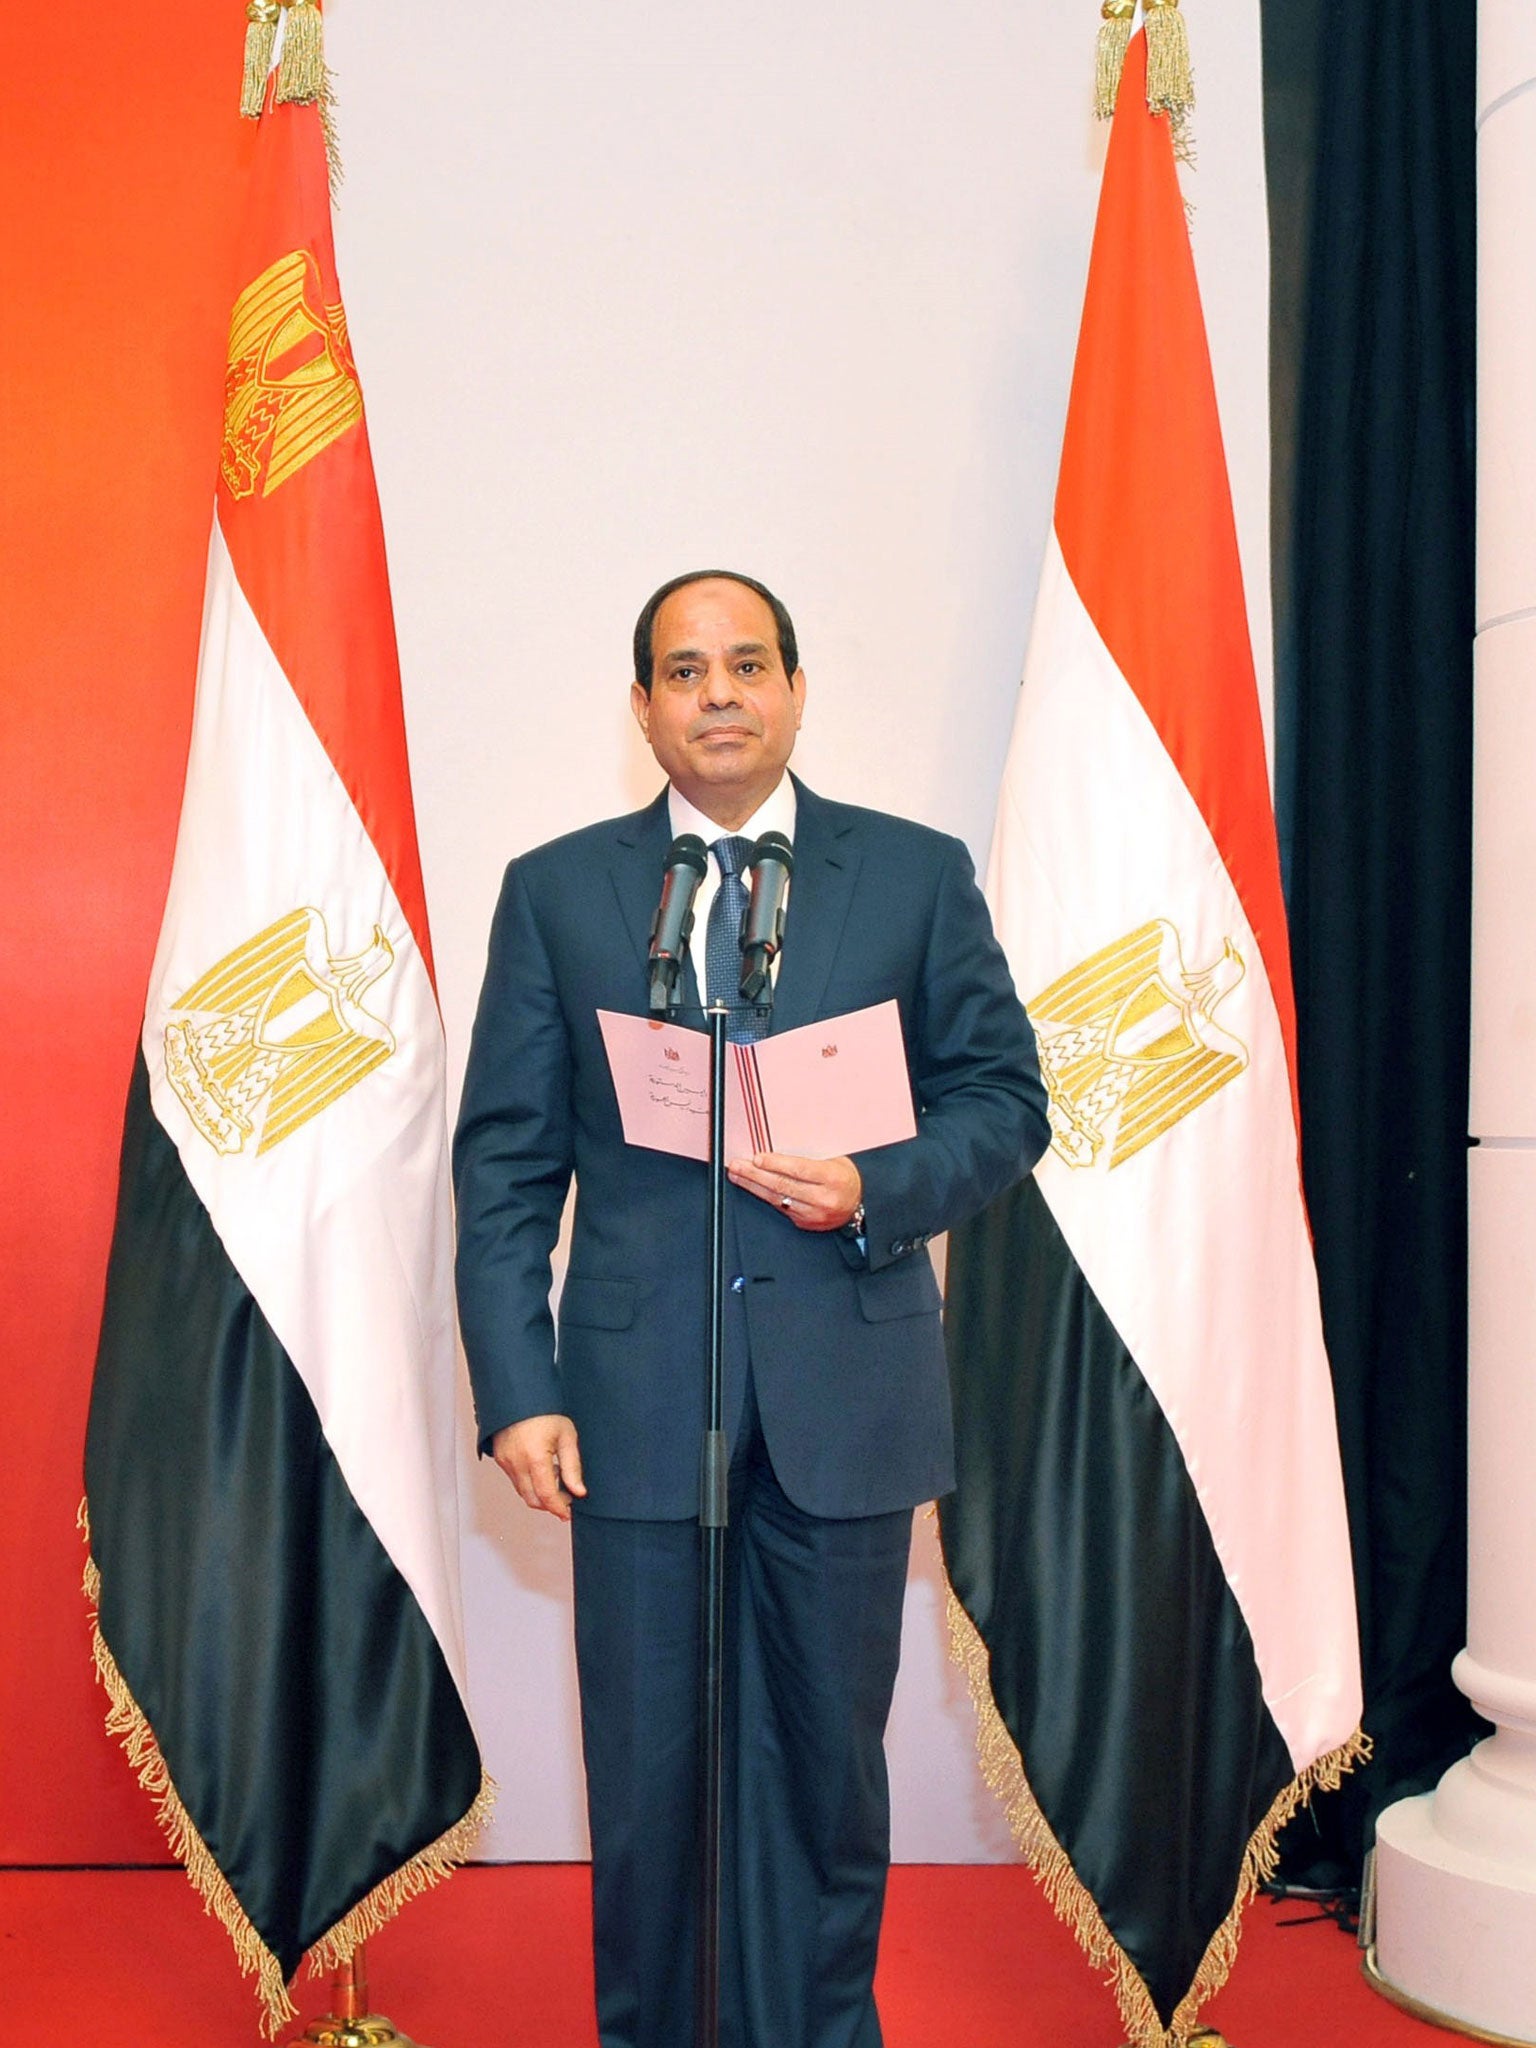 Egypt election: Abdel Fattah al-Sisi is sworn in as President | The